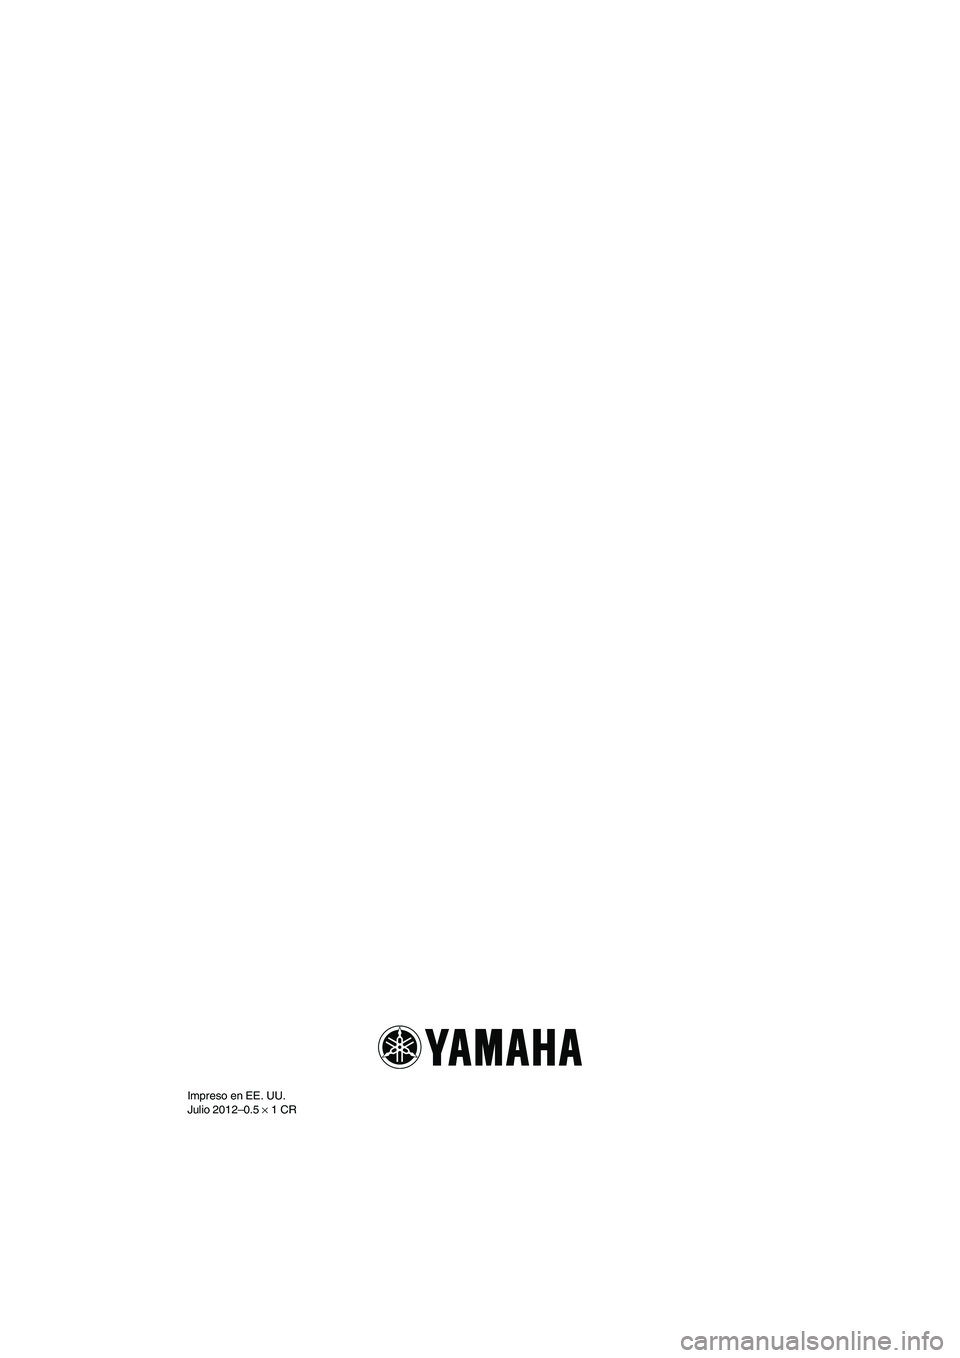 YAMAHA FX HO 2013  Manuale de Empleo (in Spanish) Impreso en EE. UU.
Julio 2012–0.5 × 1 CR
UF2T71S0.book  Page 1  Friday, July 13, 2012  5:26 PM 